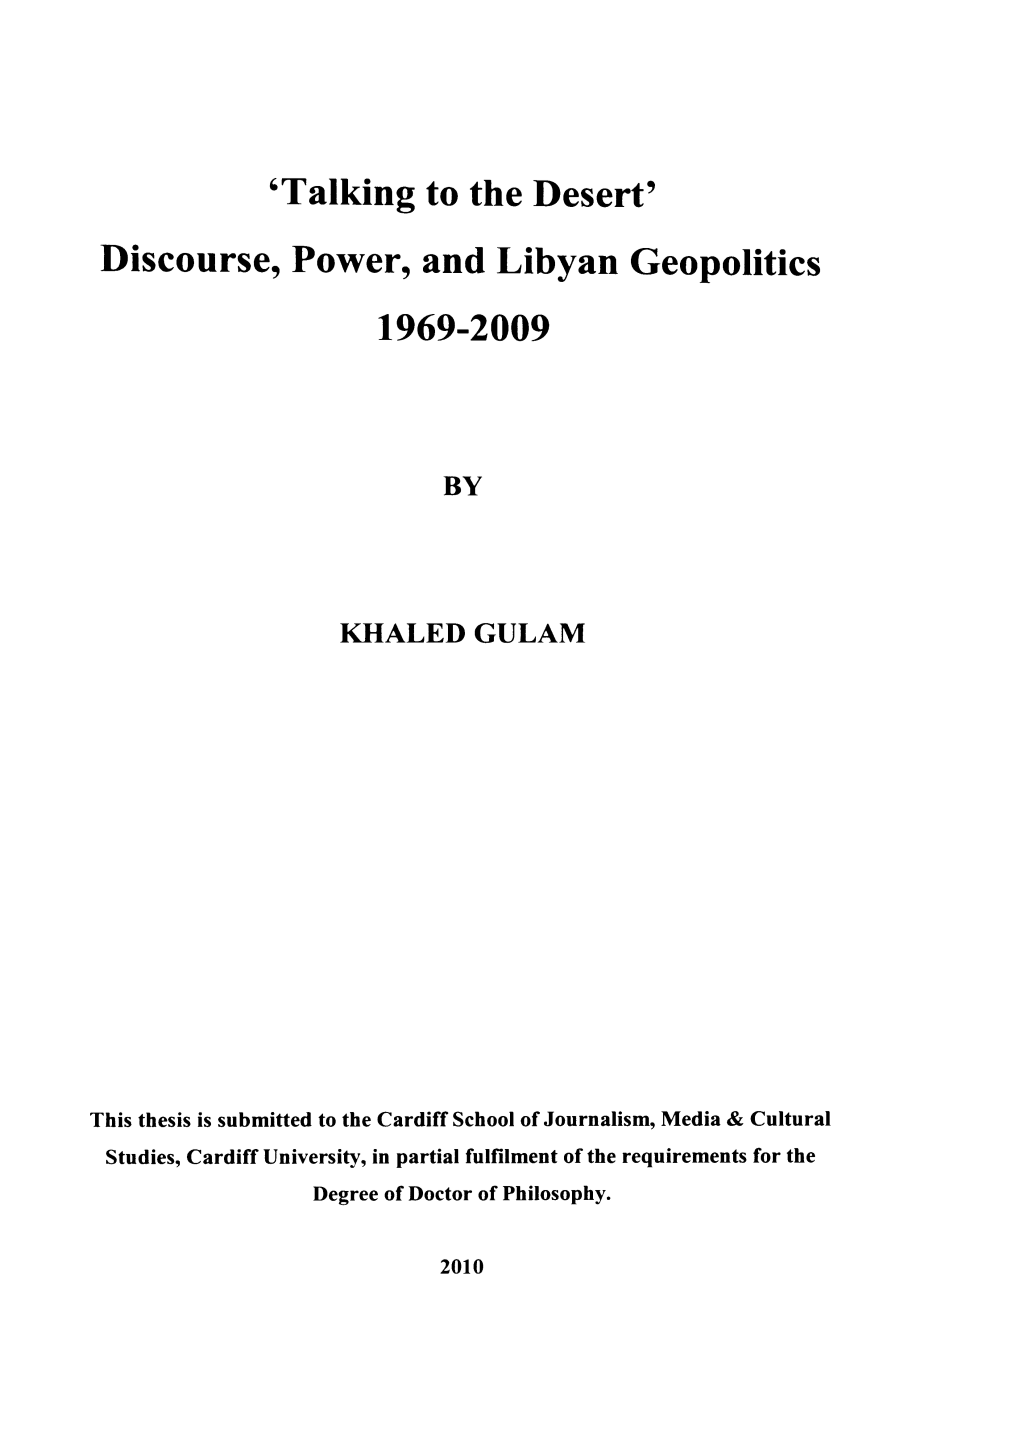 Discourse, Power, and Libyan Geopolitics 1969-2009